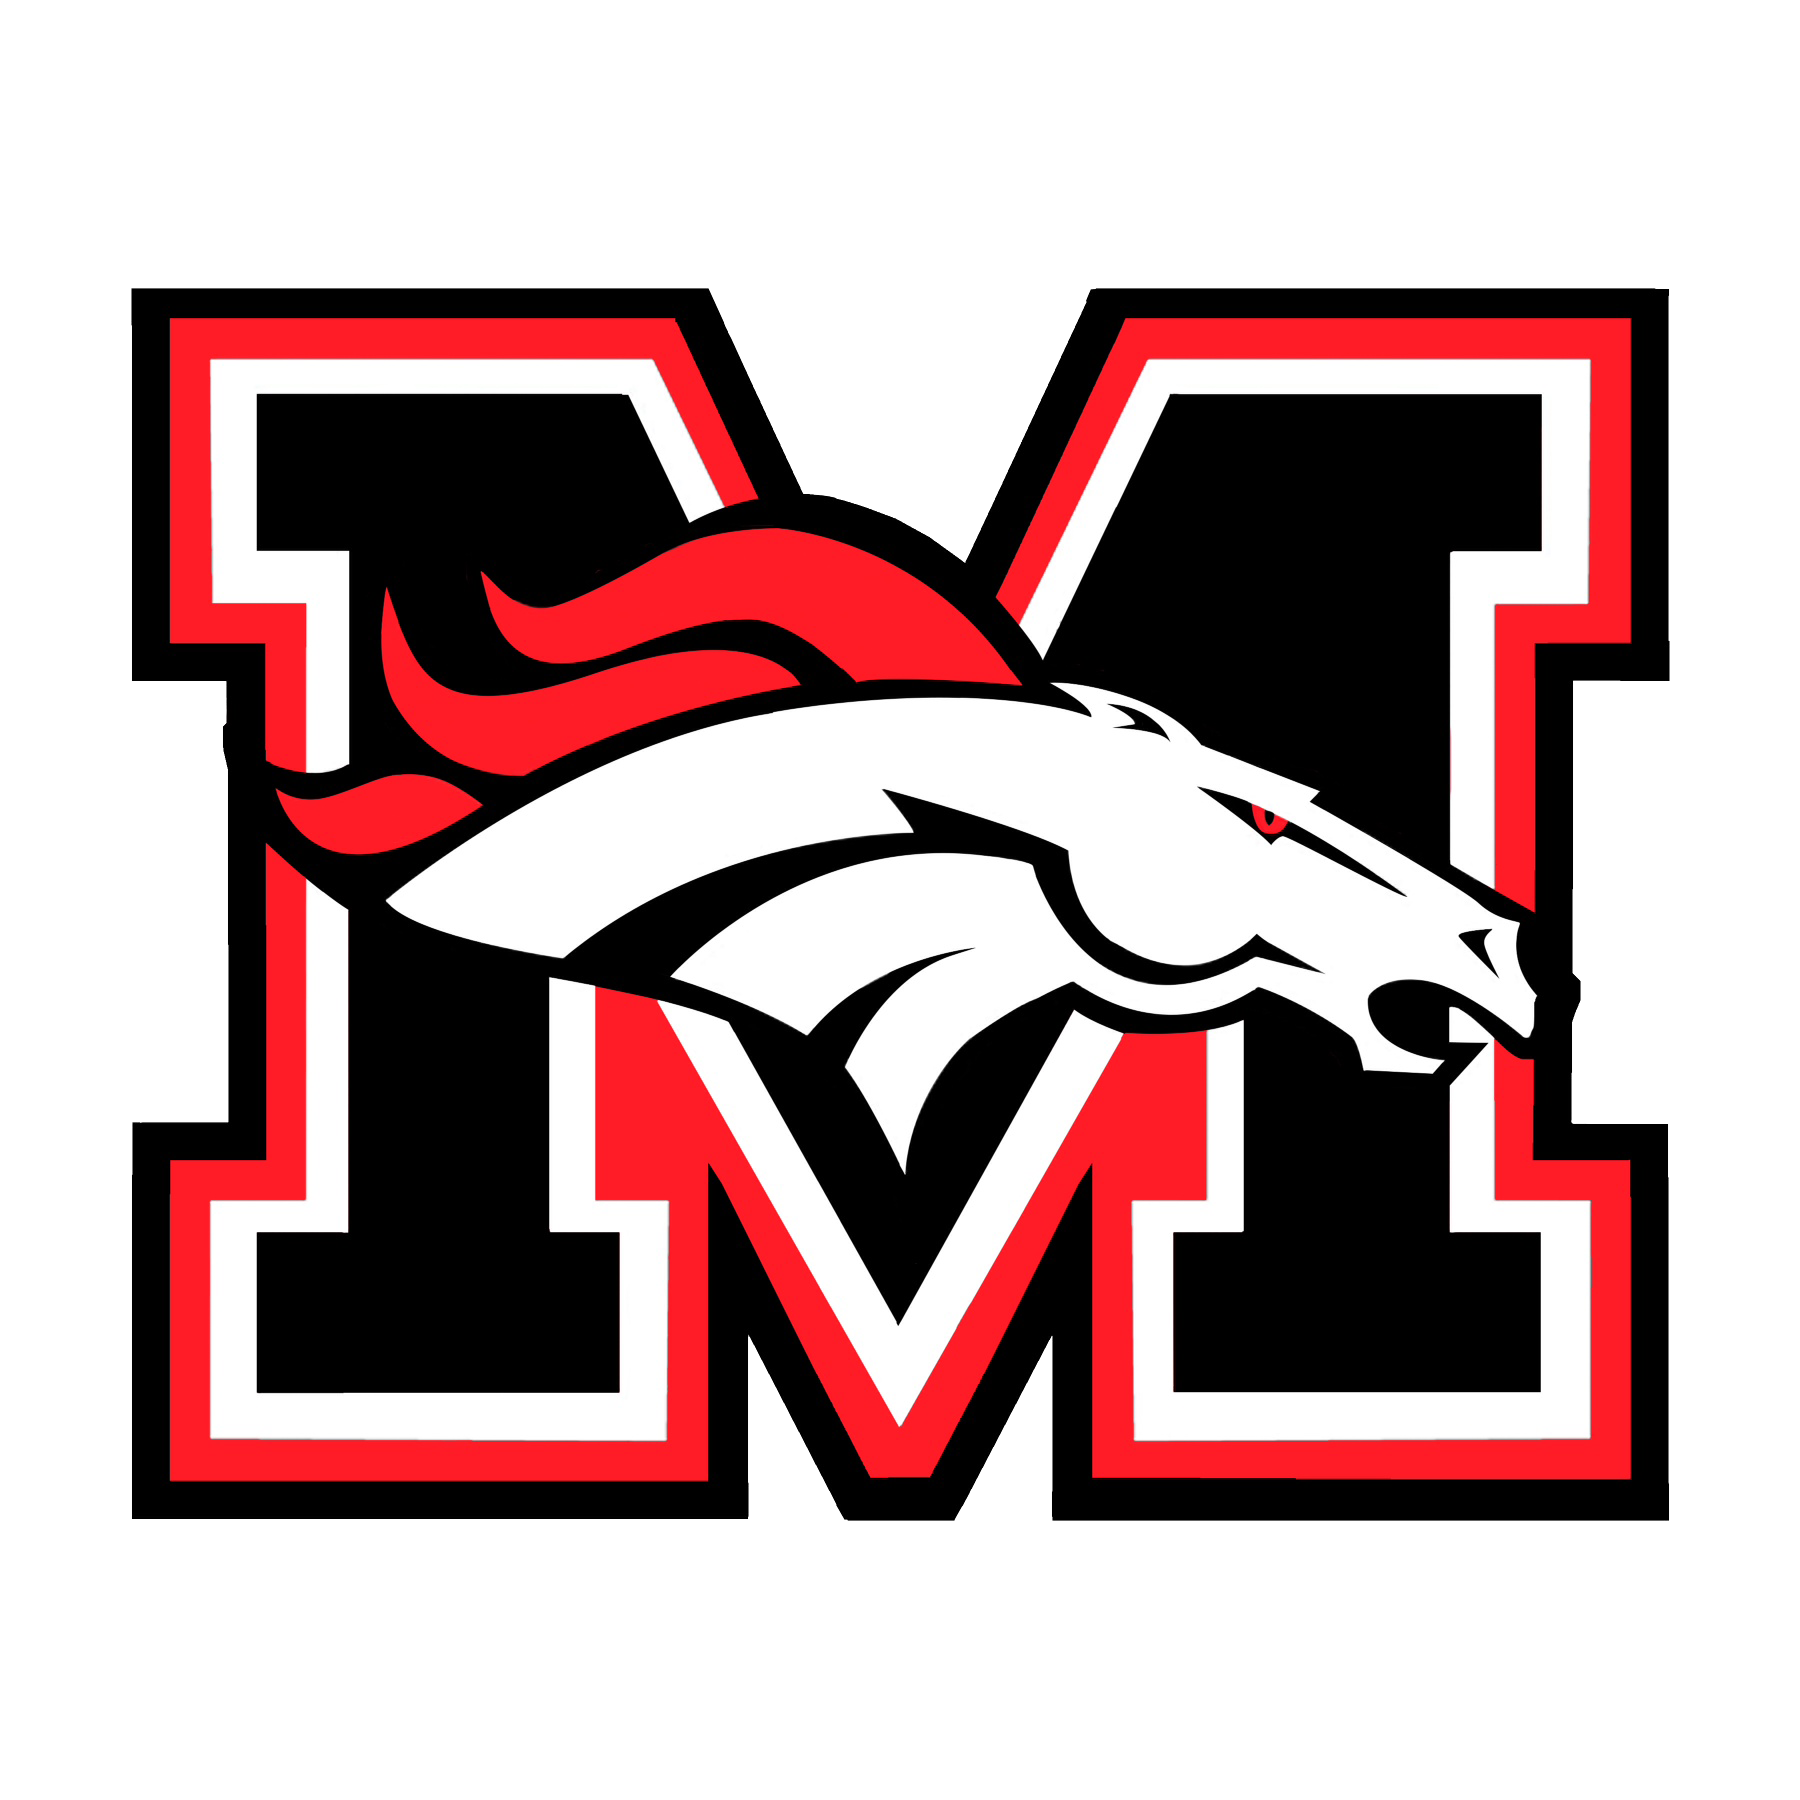 Mustang Public Schools logo